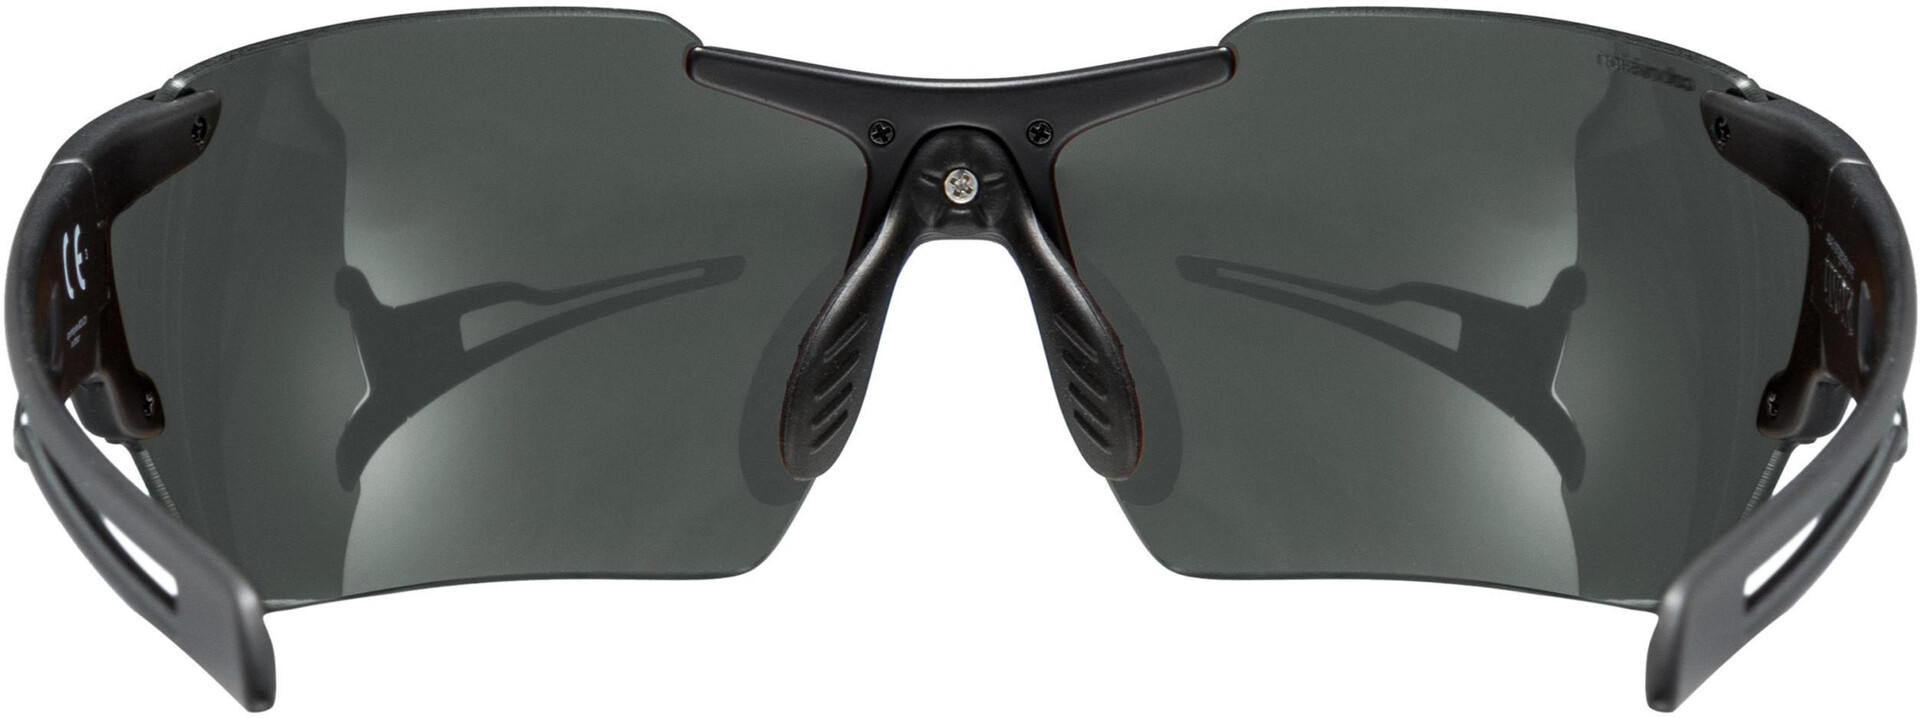 Red Mountain Bike Enduro Cycling Sunglasses UVEX 99.9% UVA/UVB Protection 